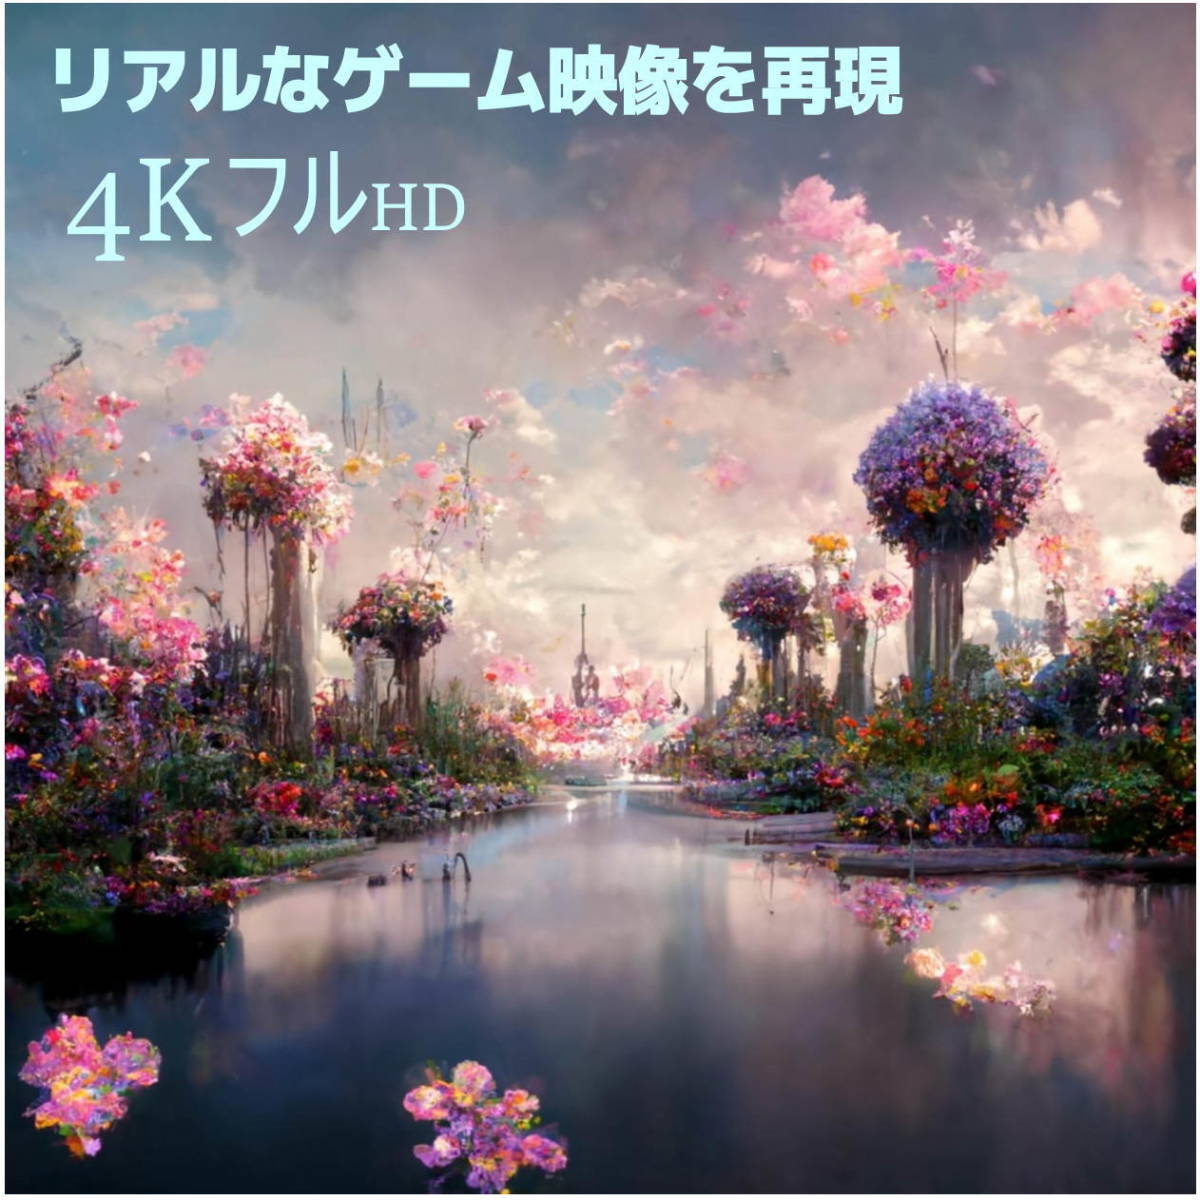 □HDMIケーブル 2m プレミアム高速 Ver2.0 4KフルHD 3D 60fps ネットワーク 対応 2HDMI-20 【送料無料】◆■_画像3